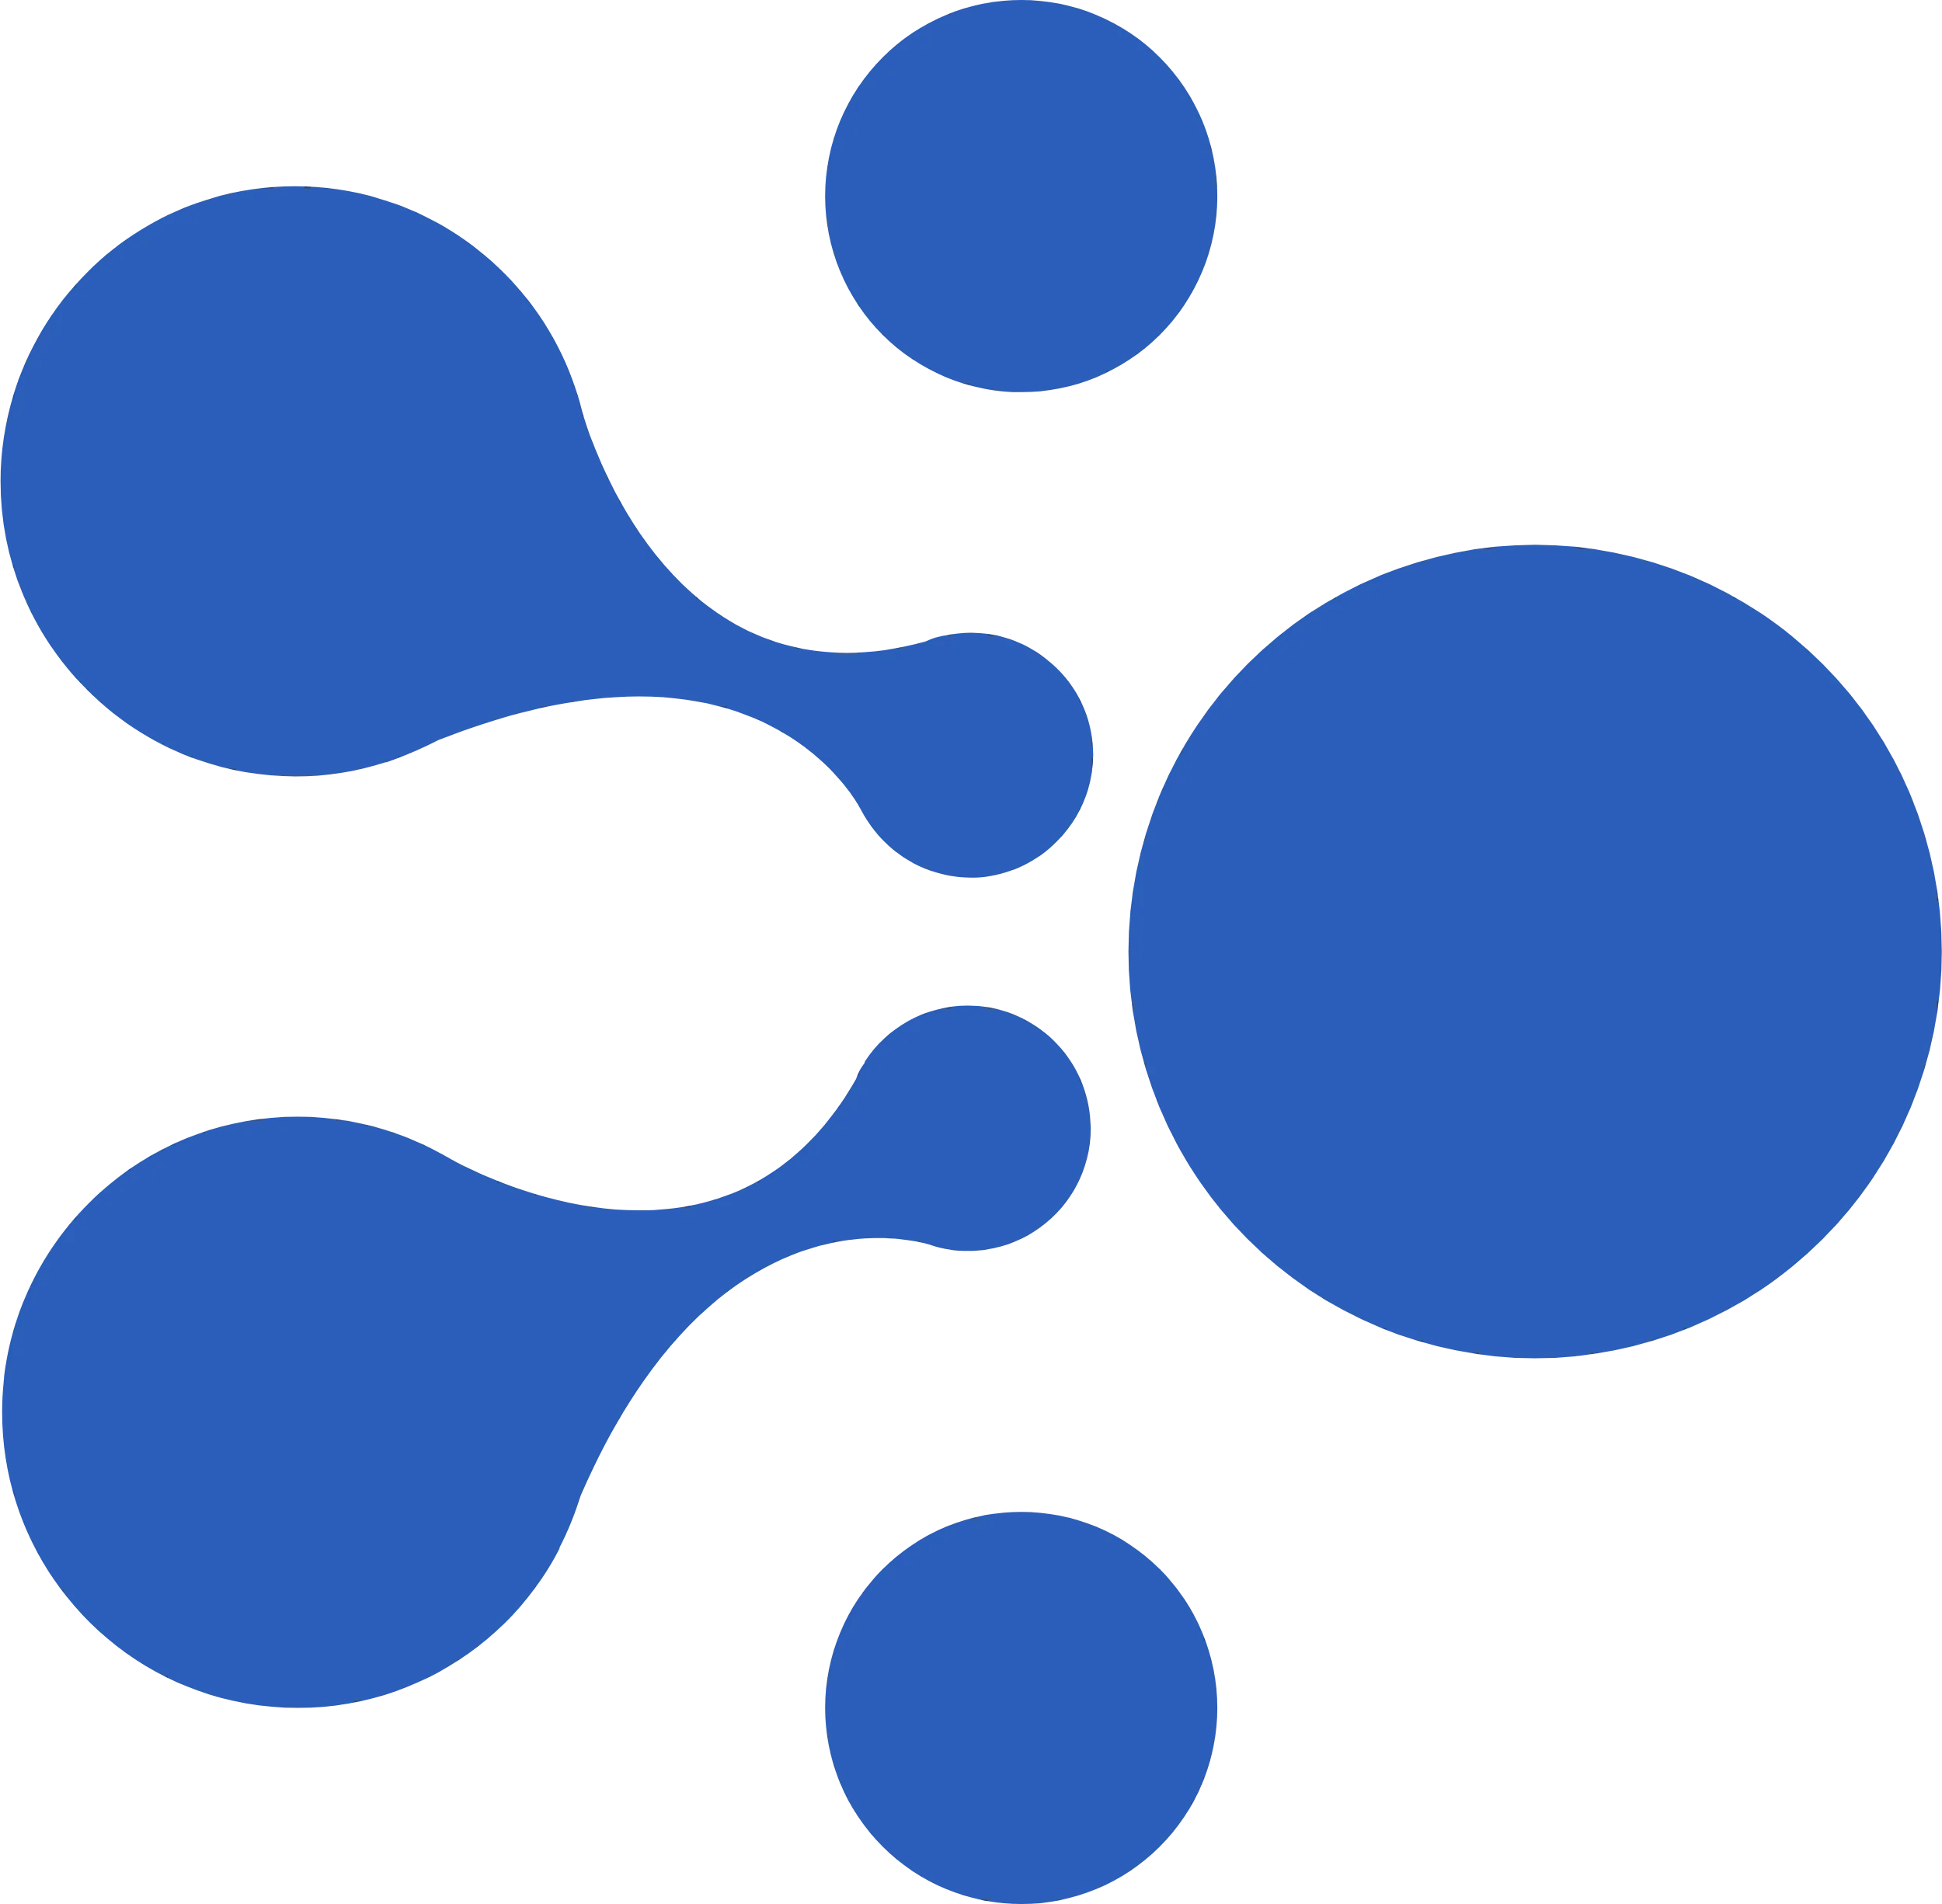 aelf logo in svg format